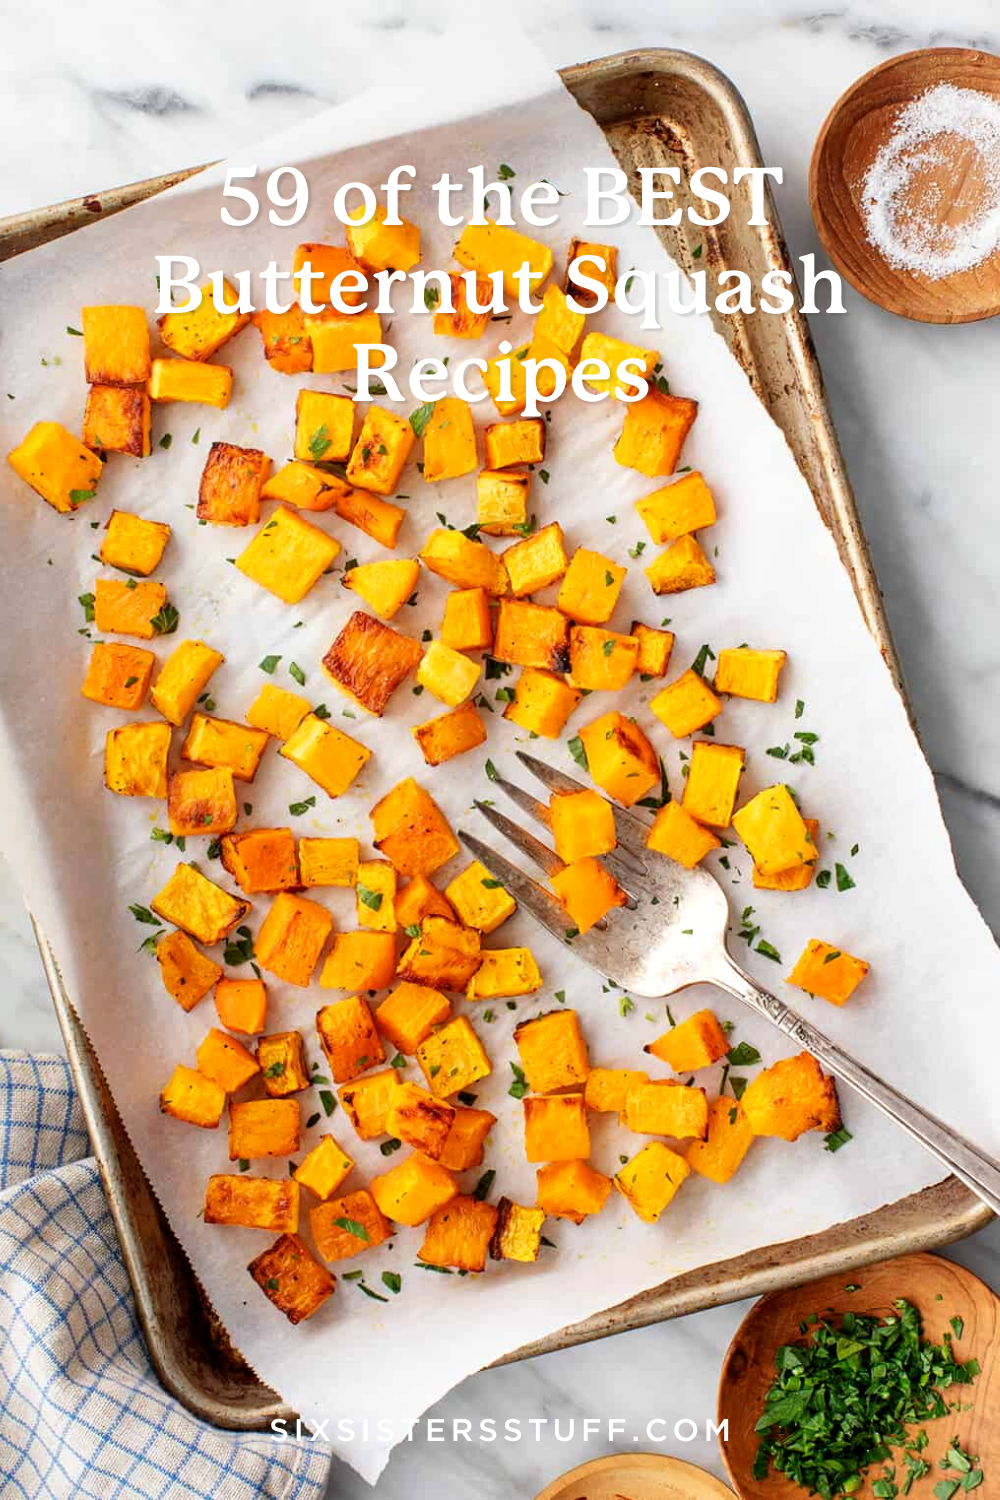 59 of the BEST Butternut Squash Recipes